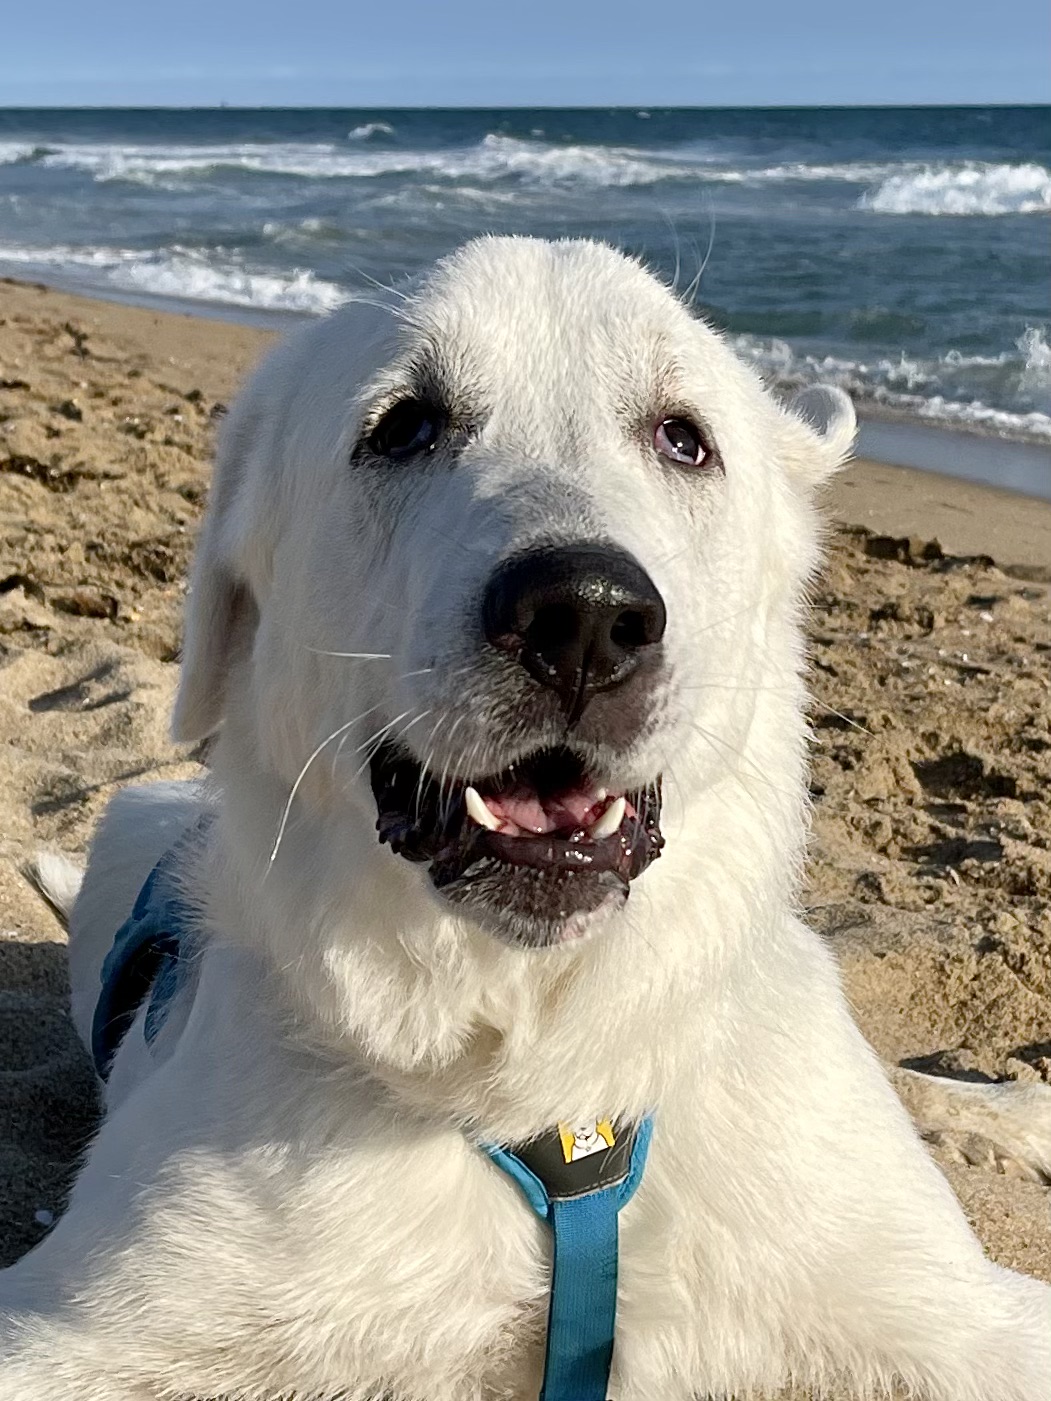 Tyson smiling on the beach